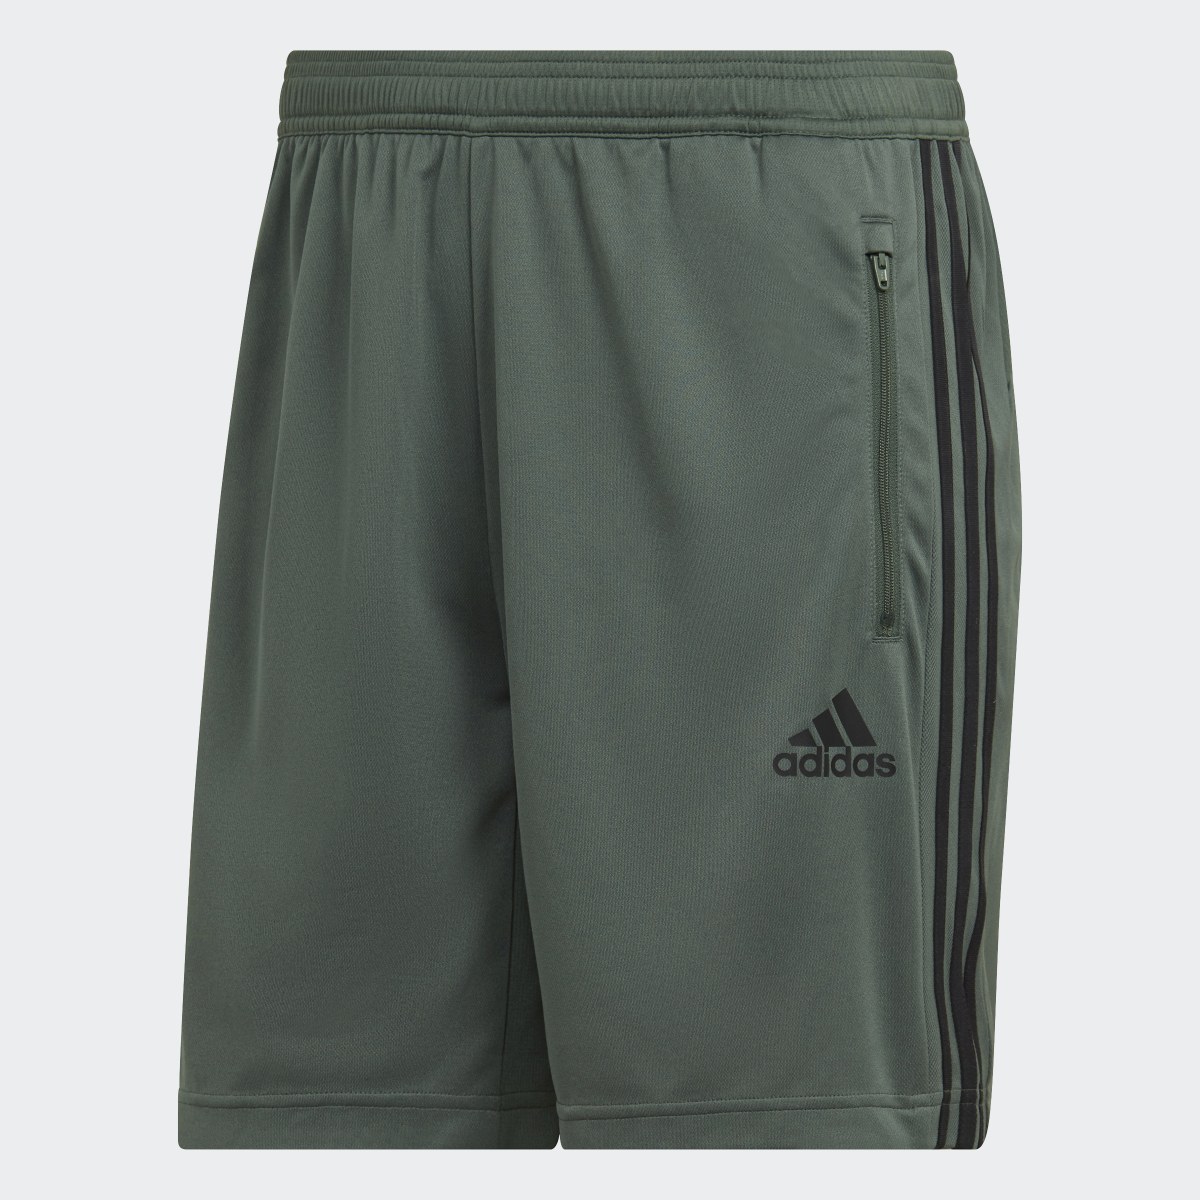 Adidas Primeblue Designed to Move Sport 3-Stripes Shorts. 4